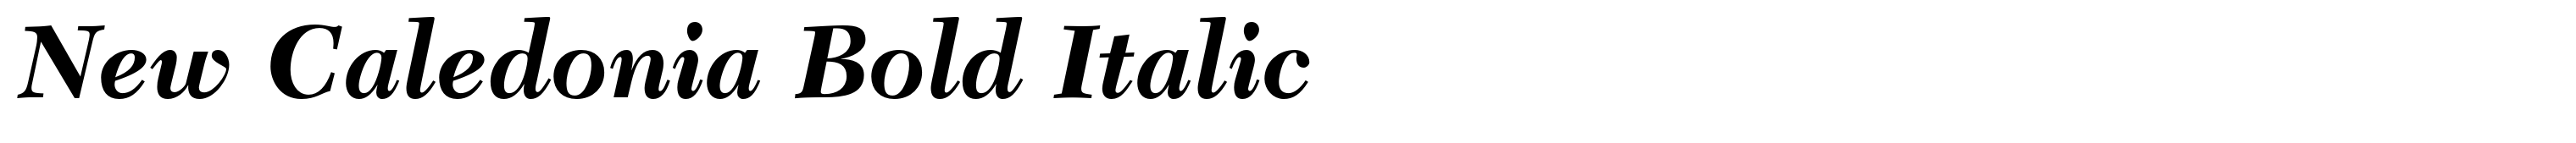 New Caledonia Bold Italic